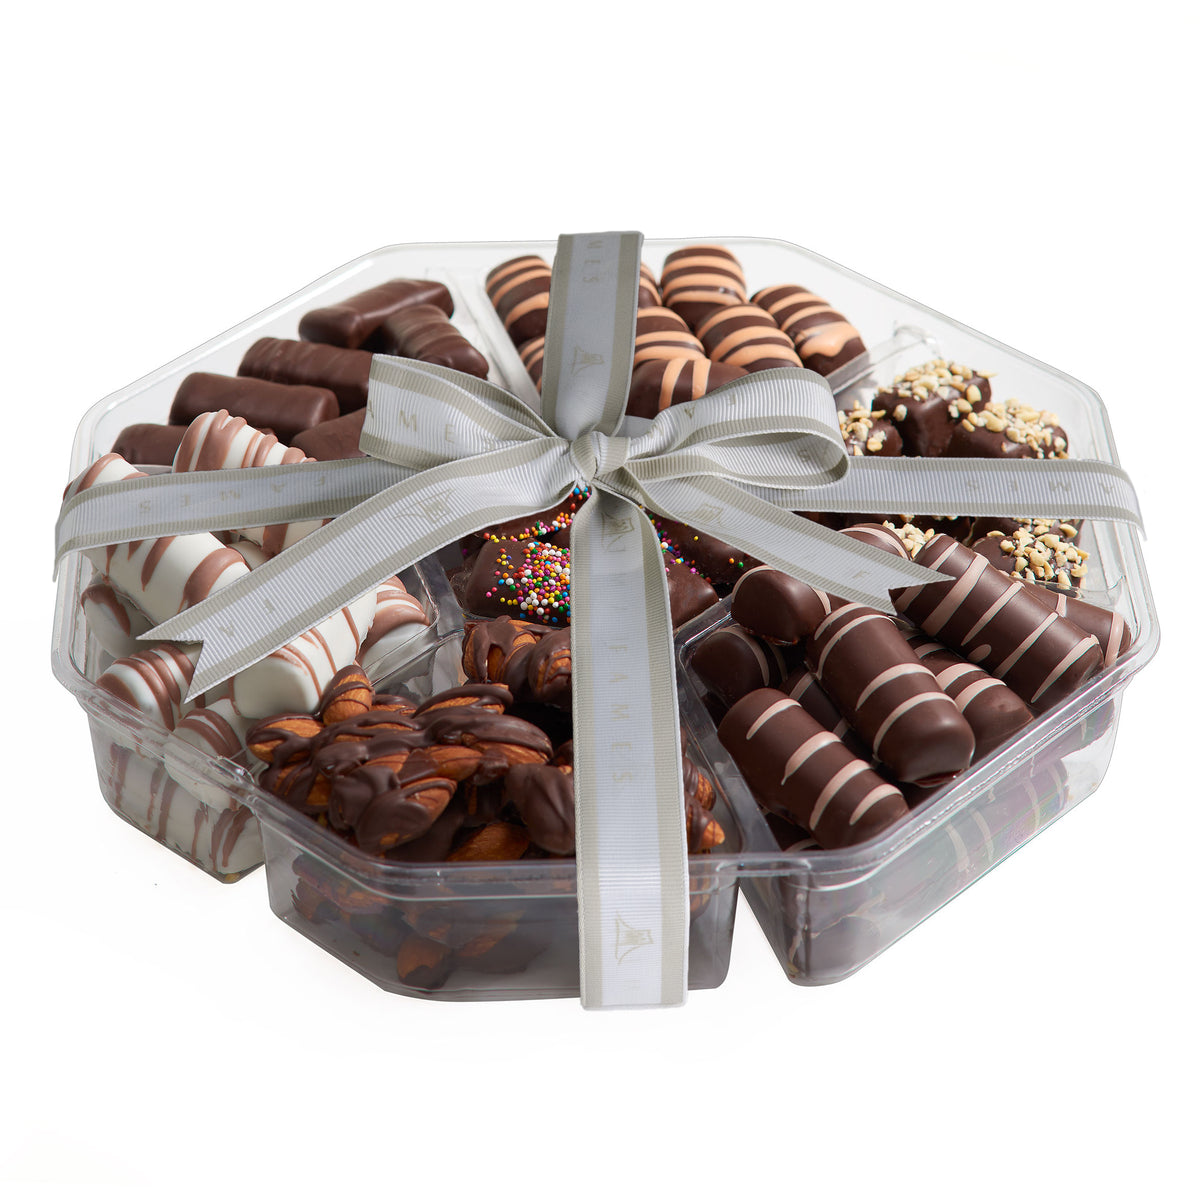 Sympathy Gift Baskets Kosher Chocolate - Friend, Sympathy, Condolences Gift Set